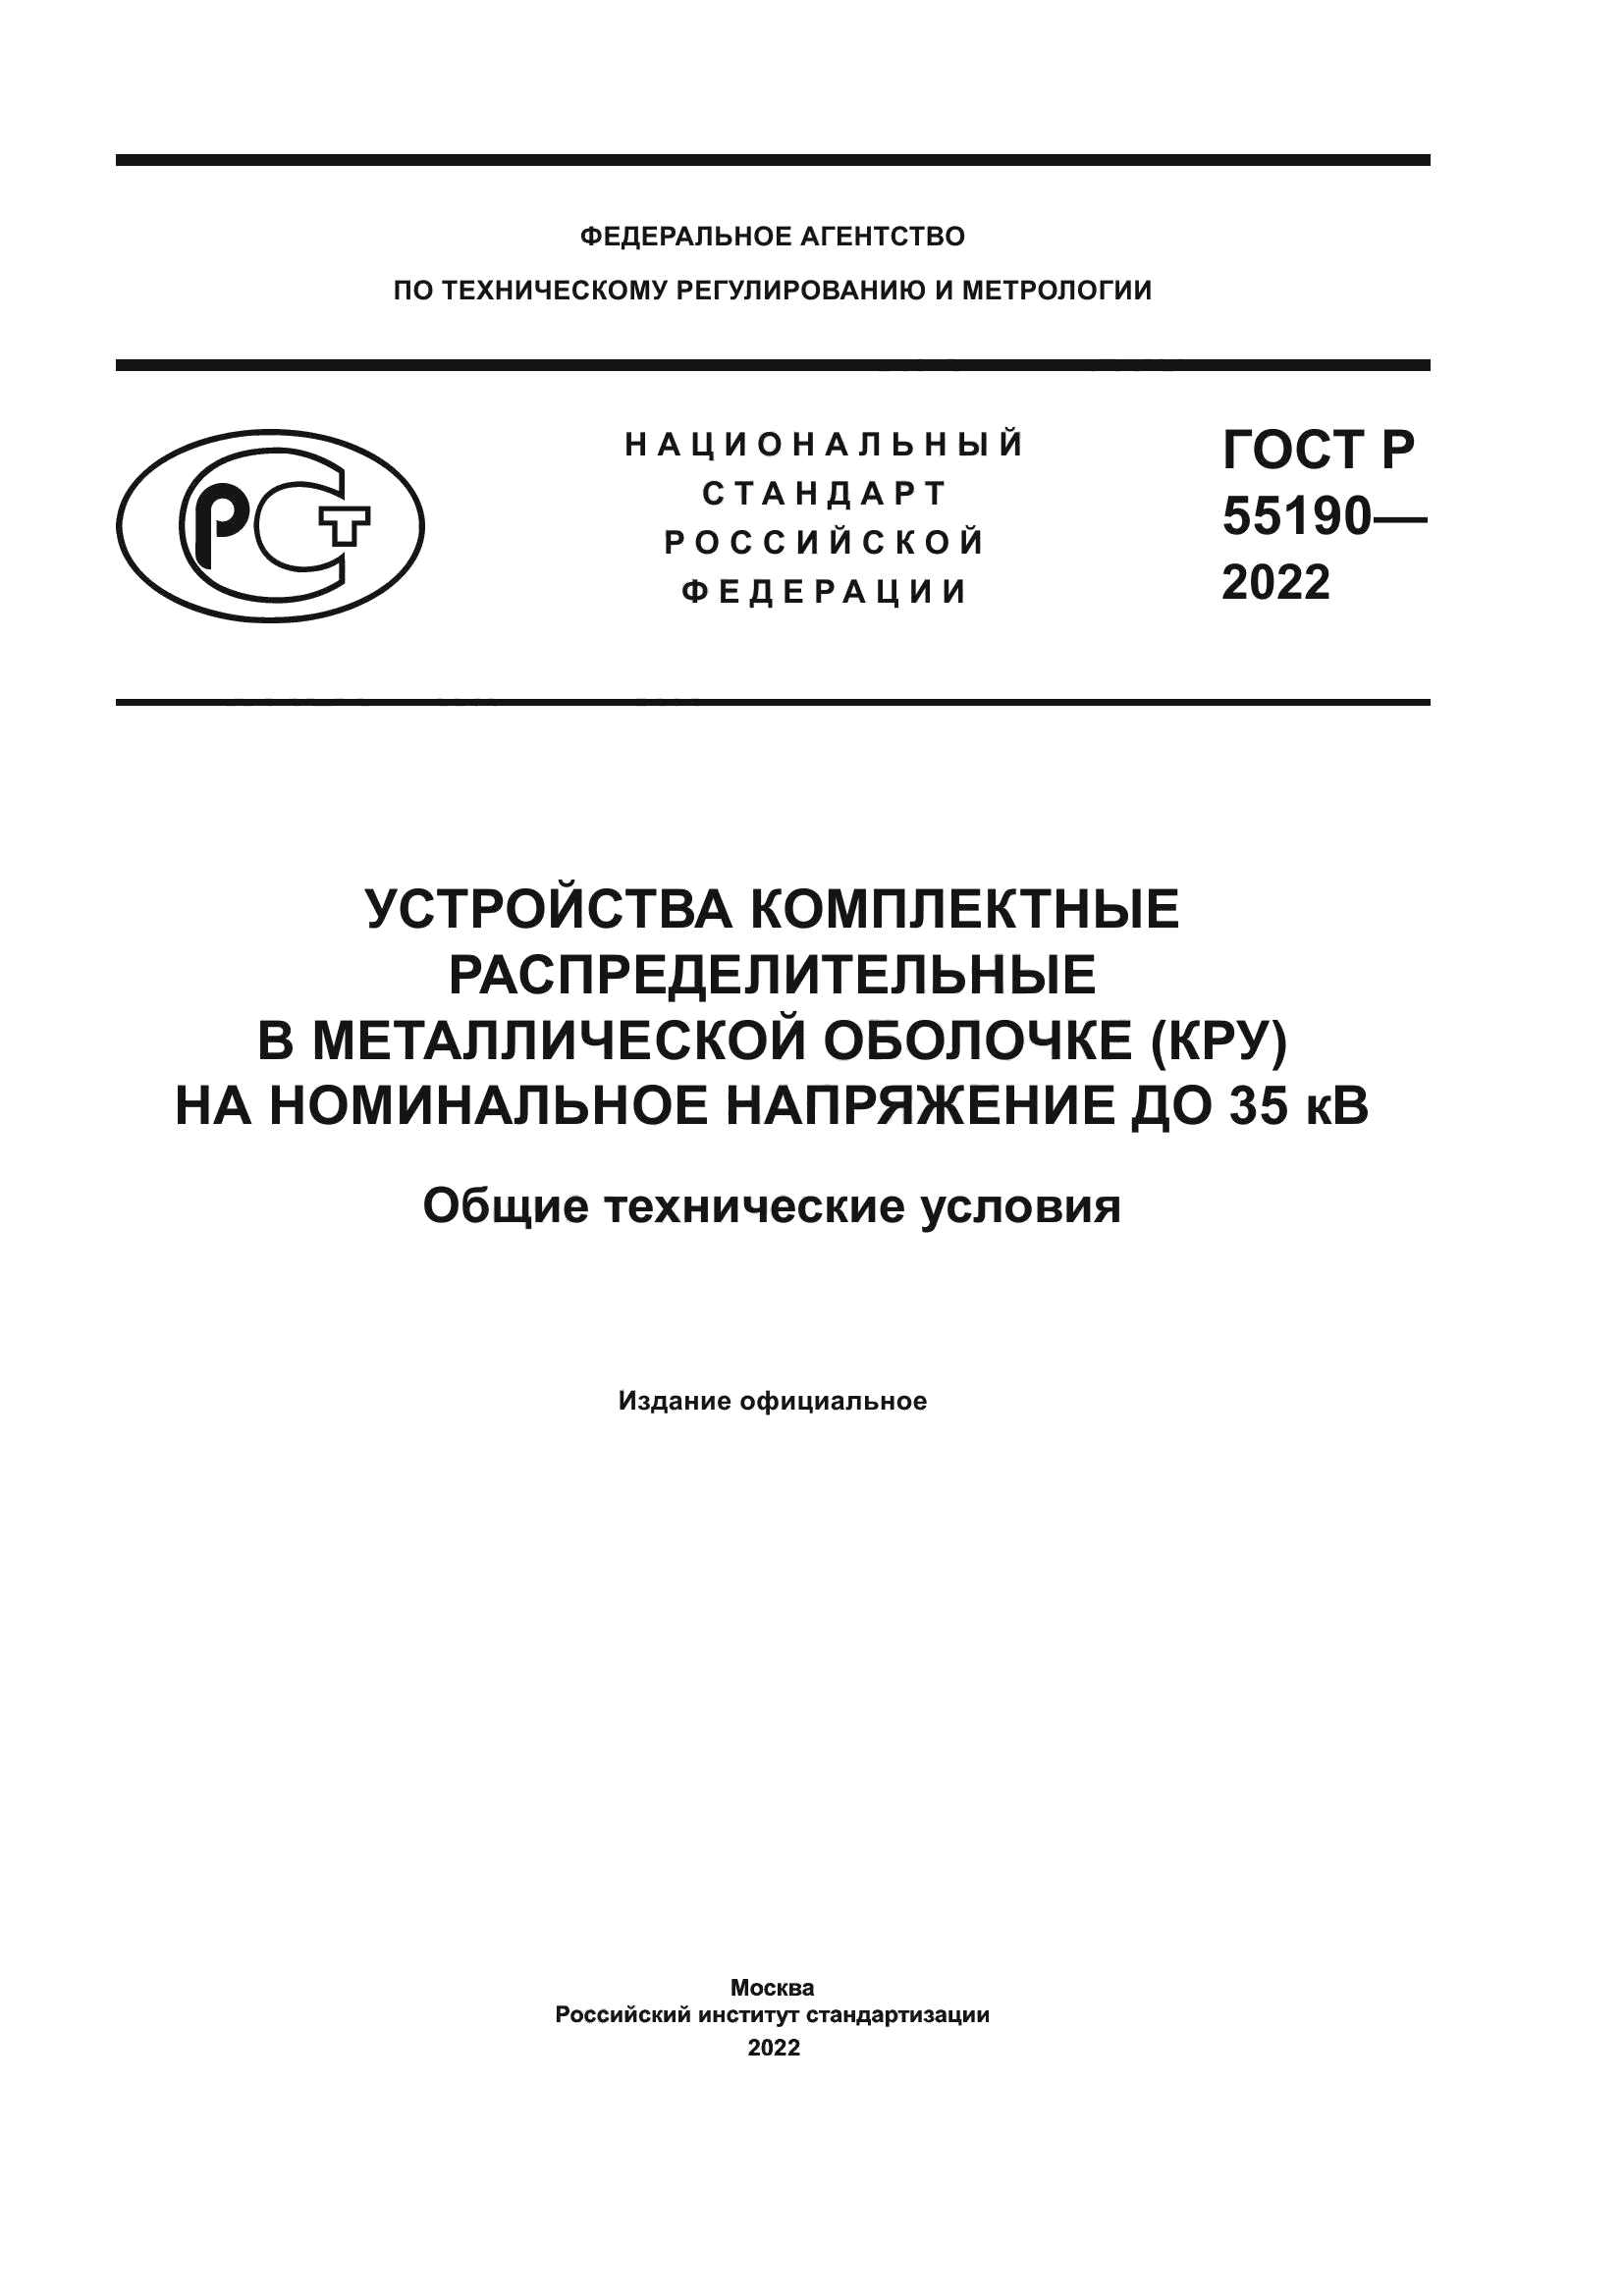 ГОСТ Р 55190-2022